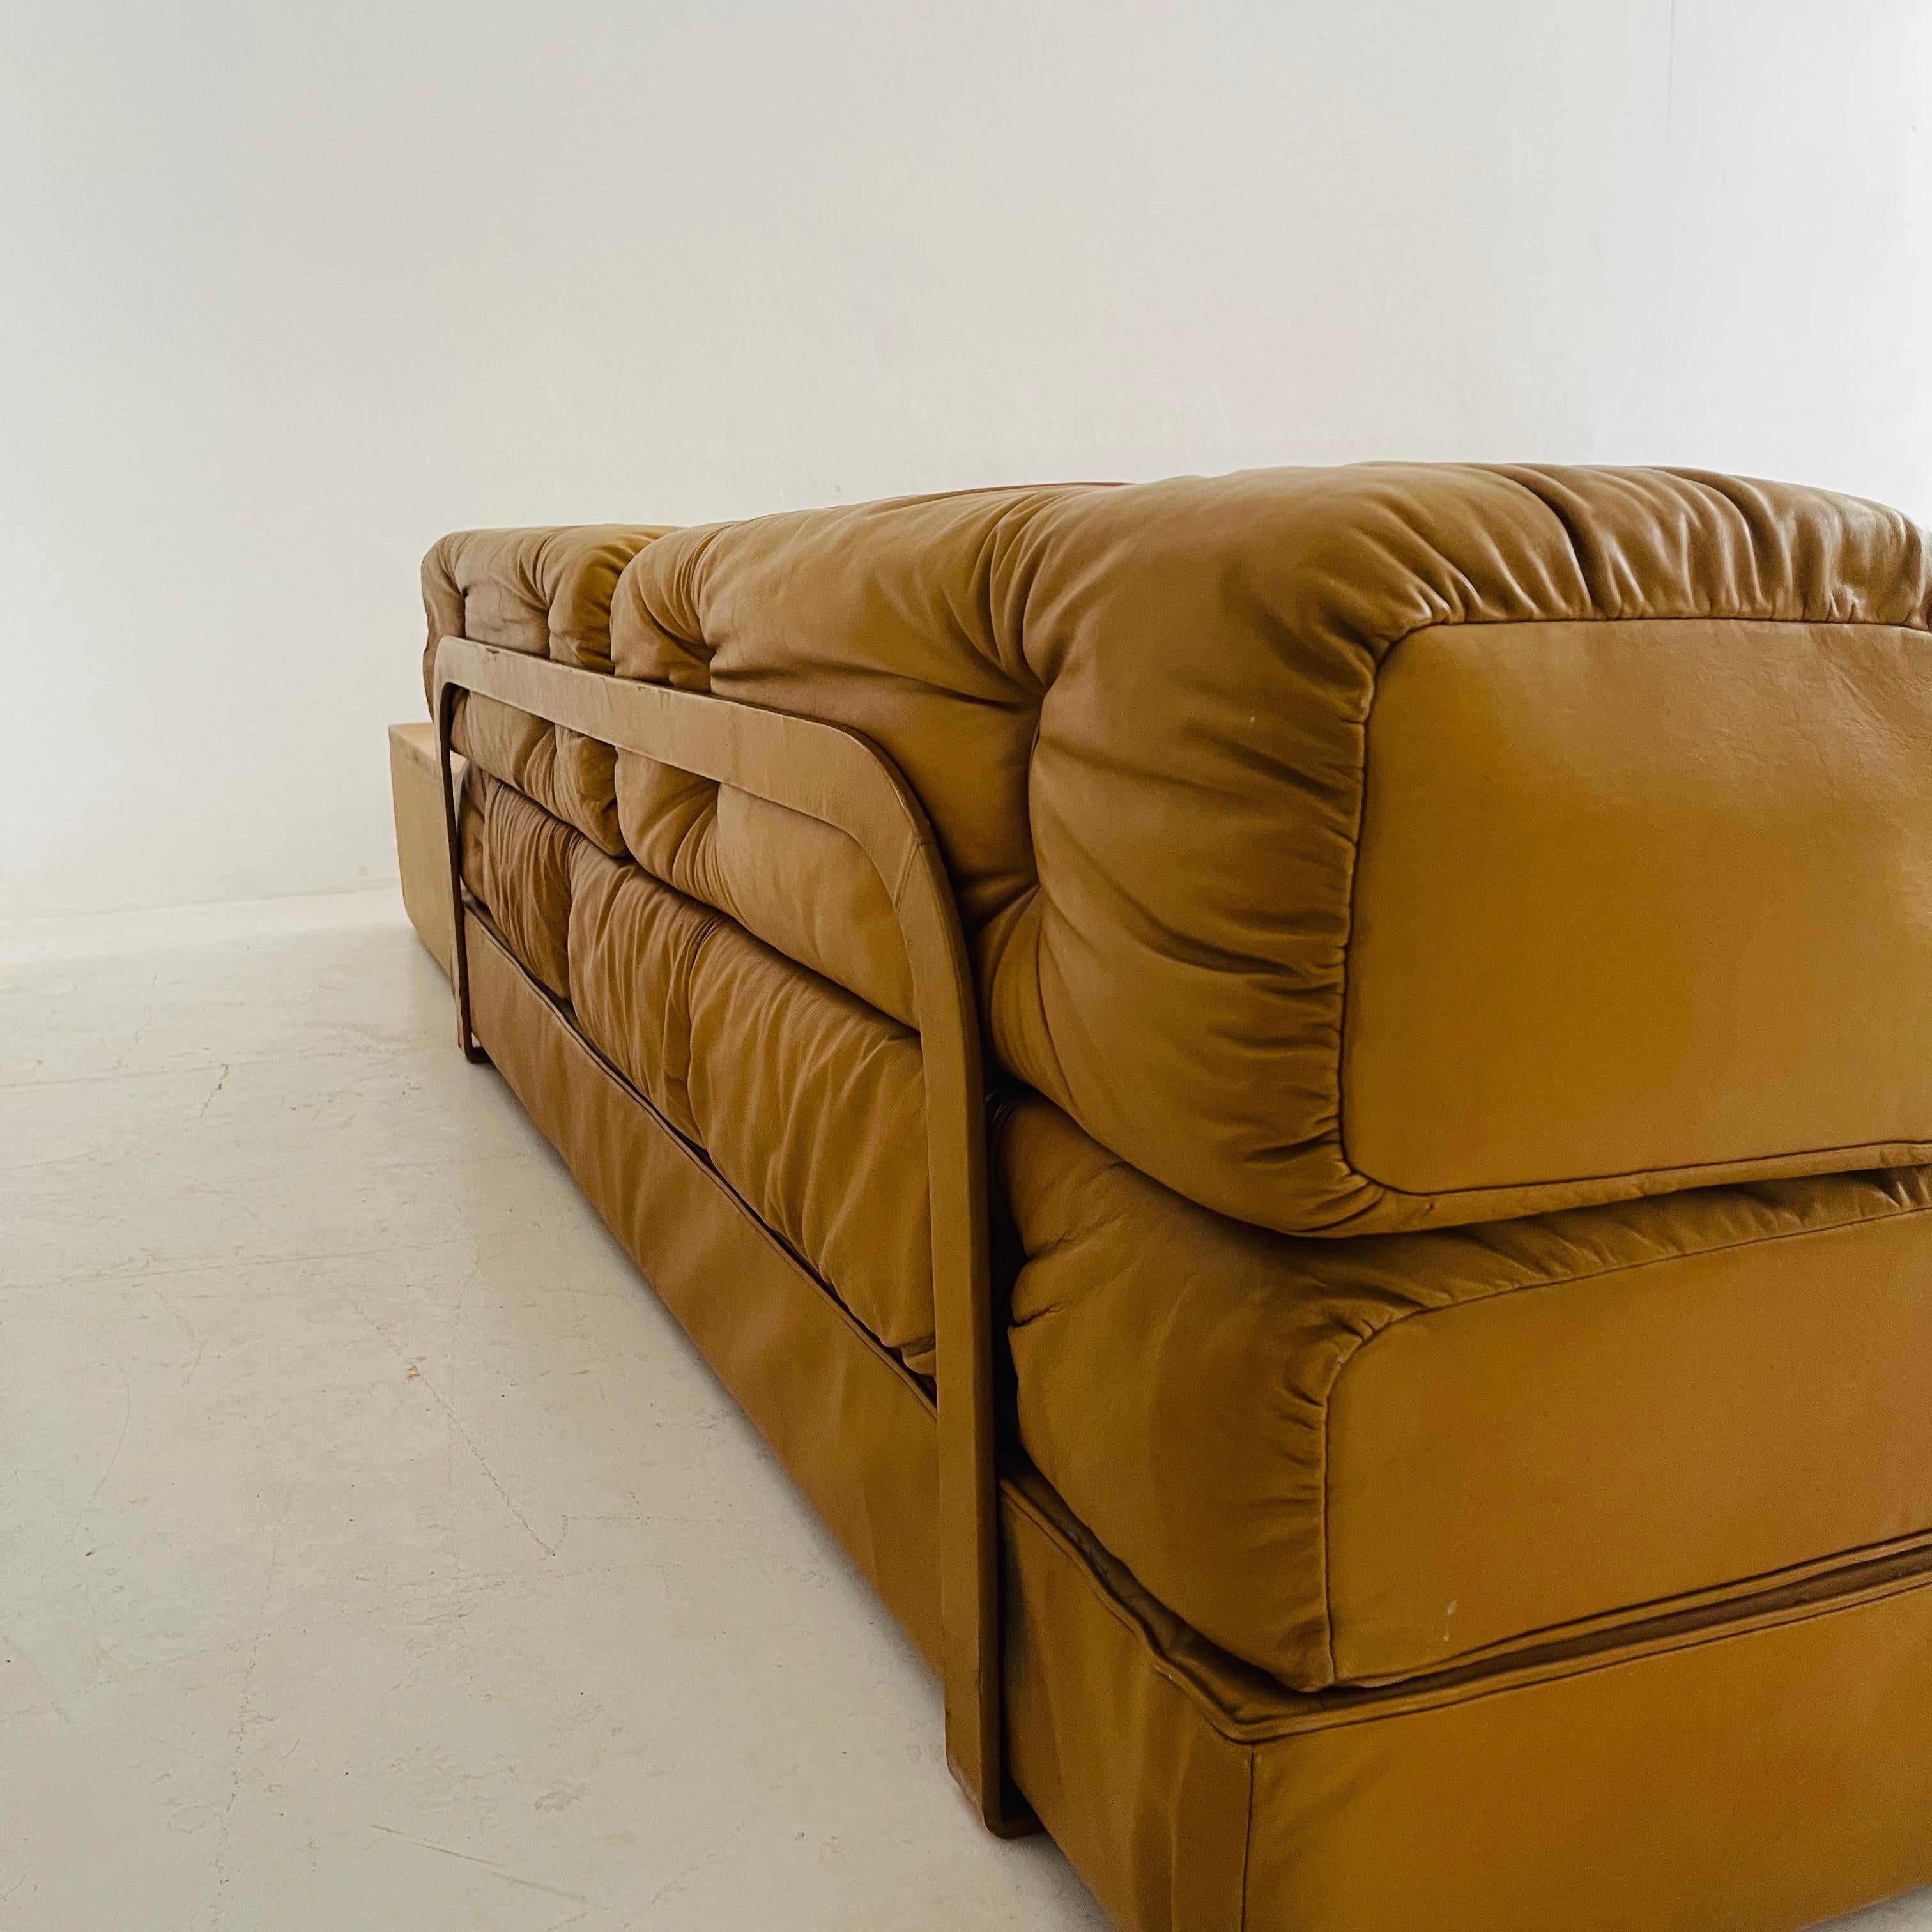 Wittmann Atrium Cognac Leather Living Room Suite Sofa Daybeds, Austria, 1970s For Sale 11